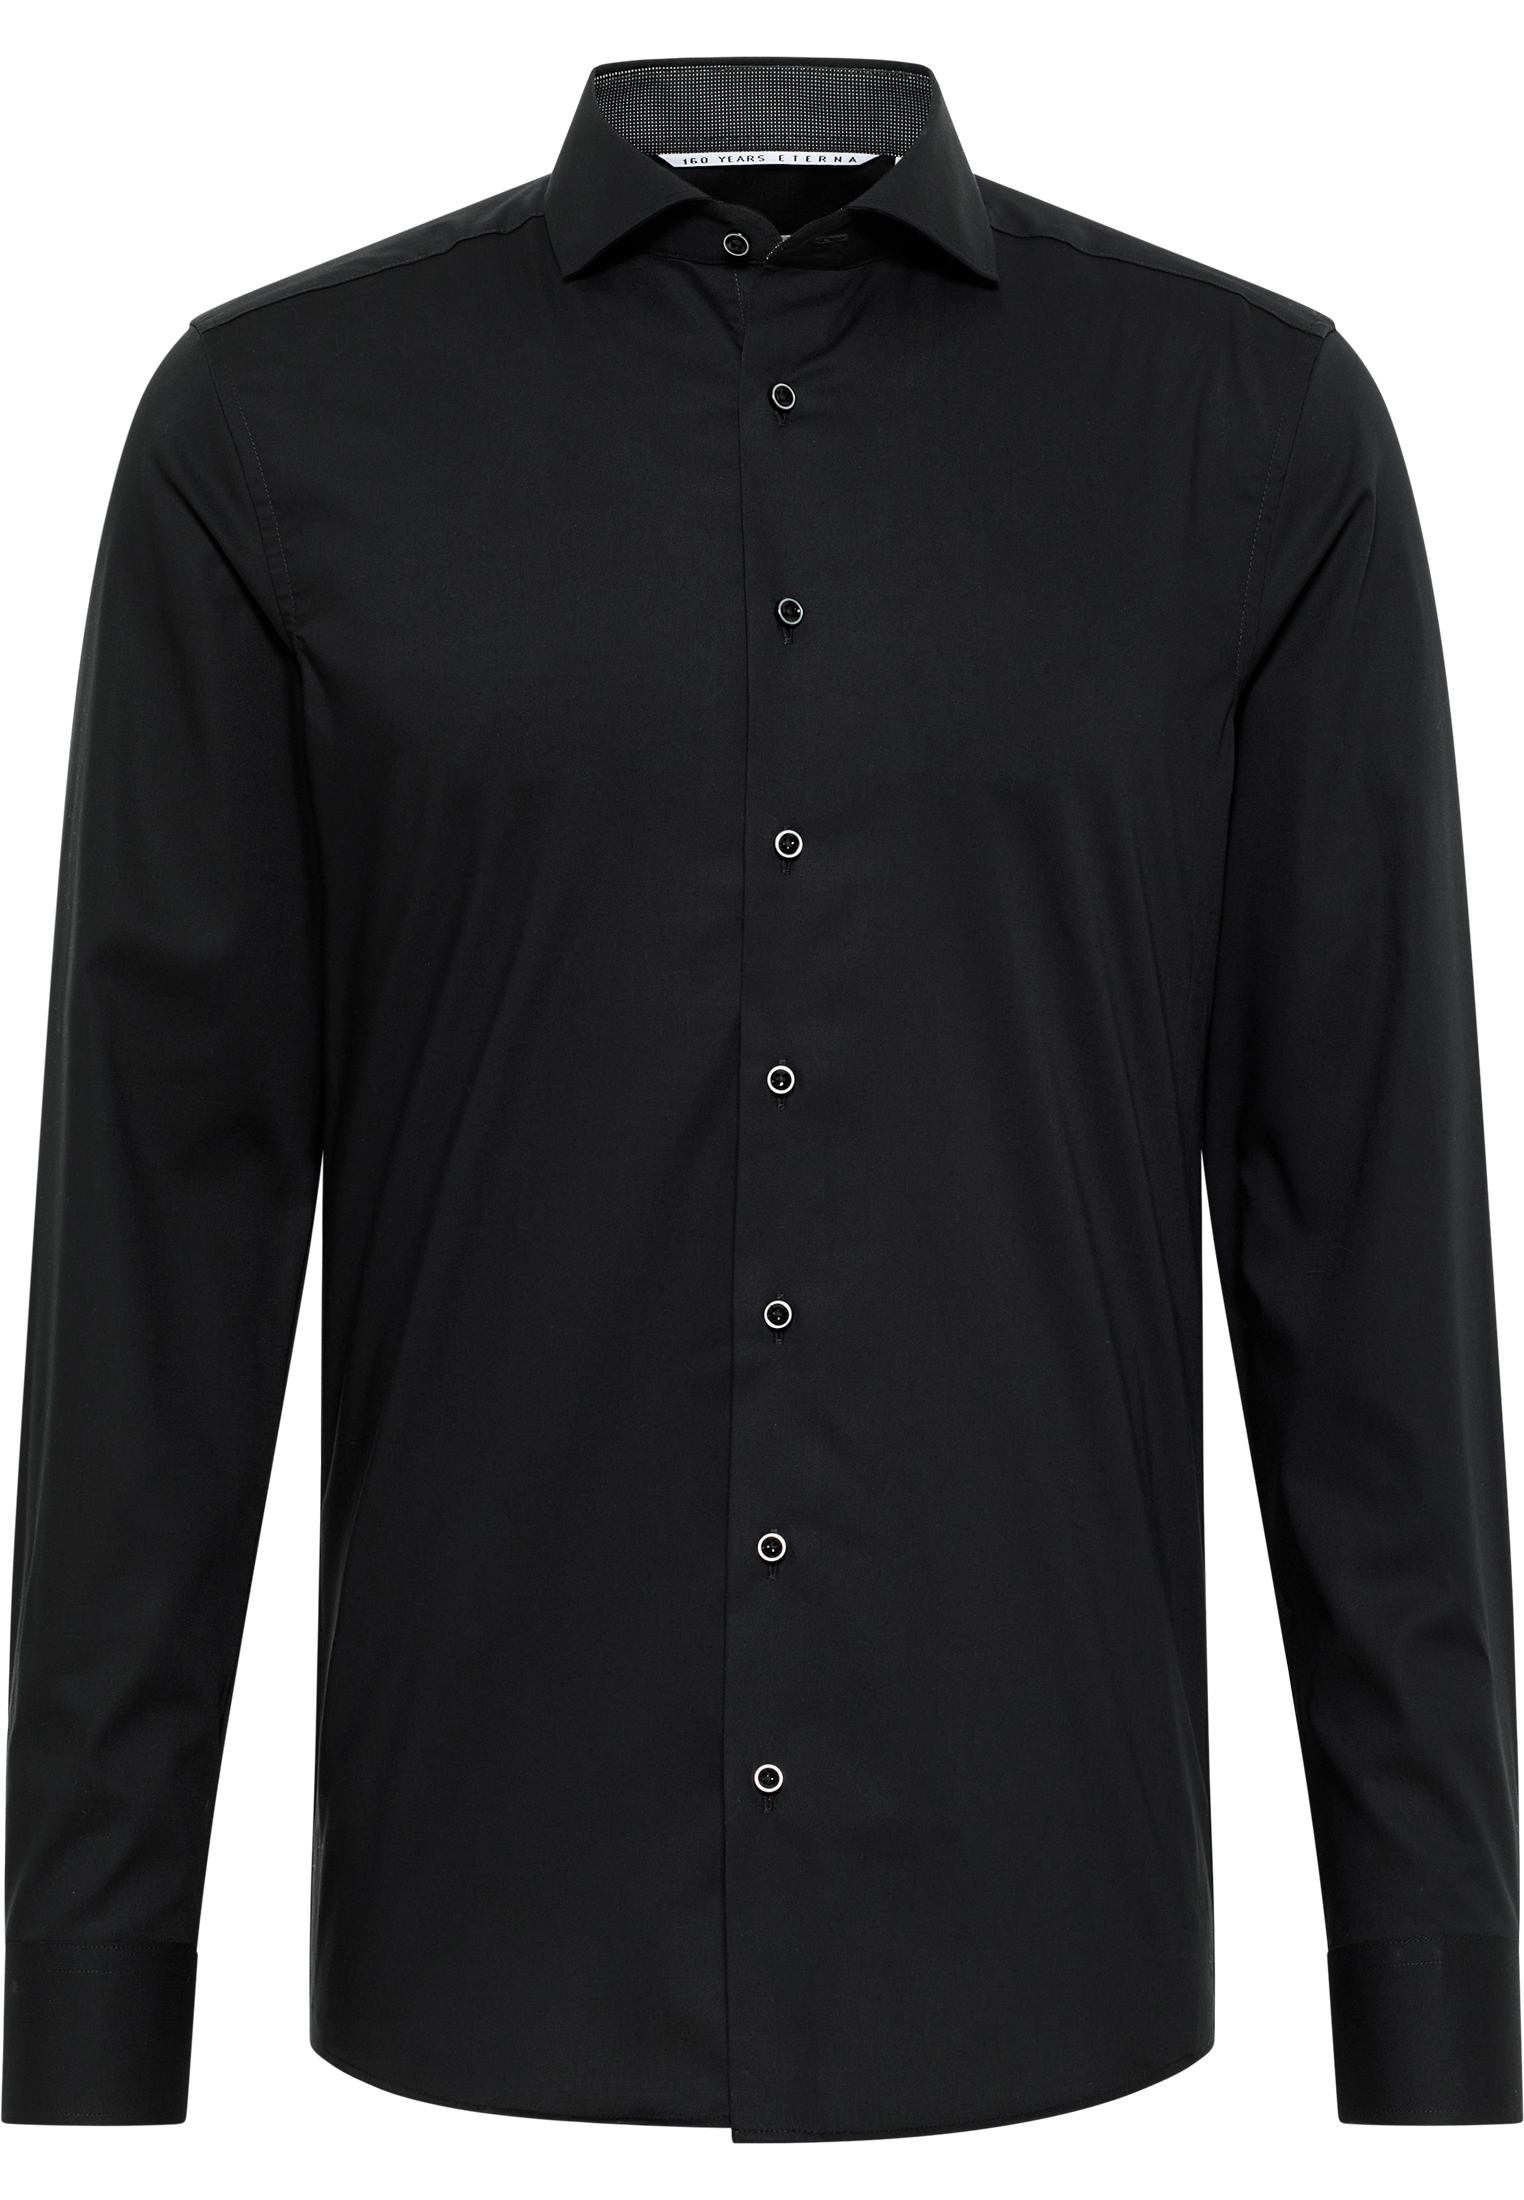 SLIM FIT Shirt in black plain